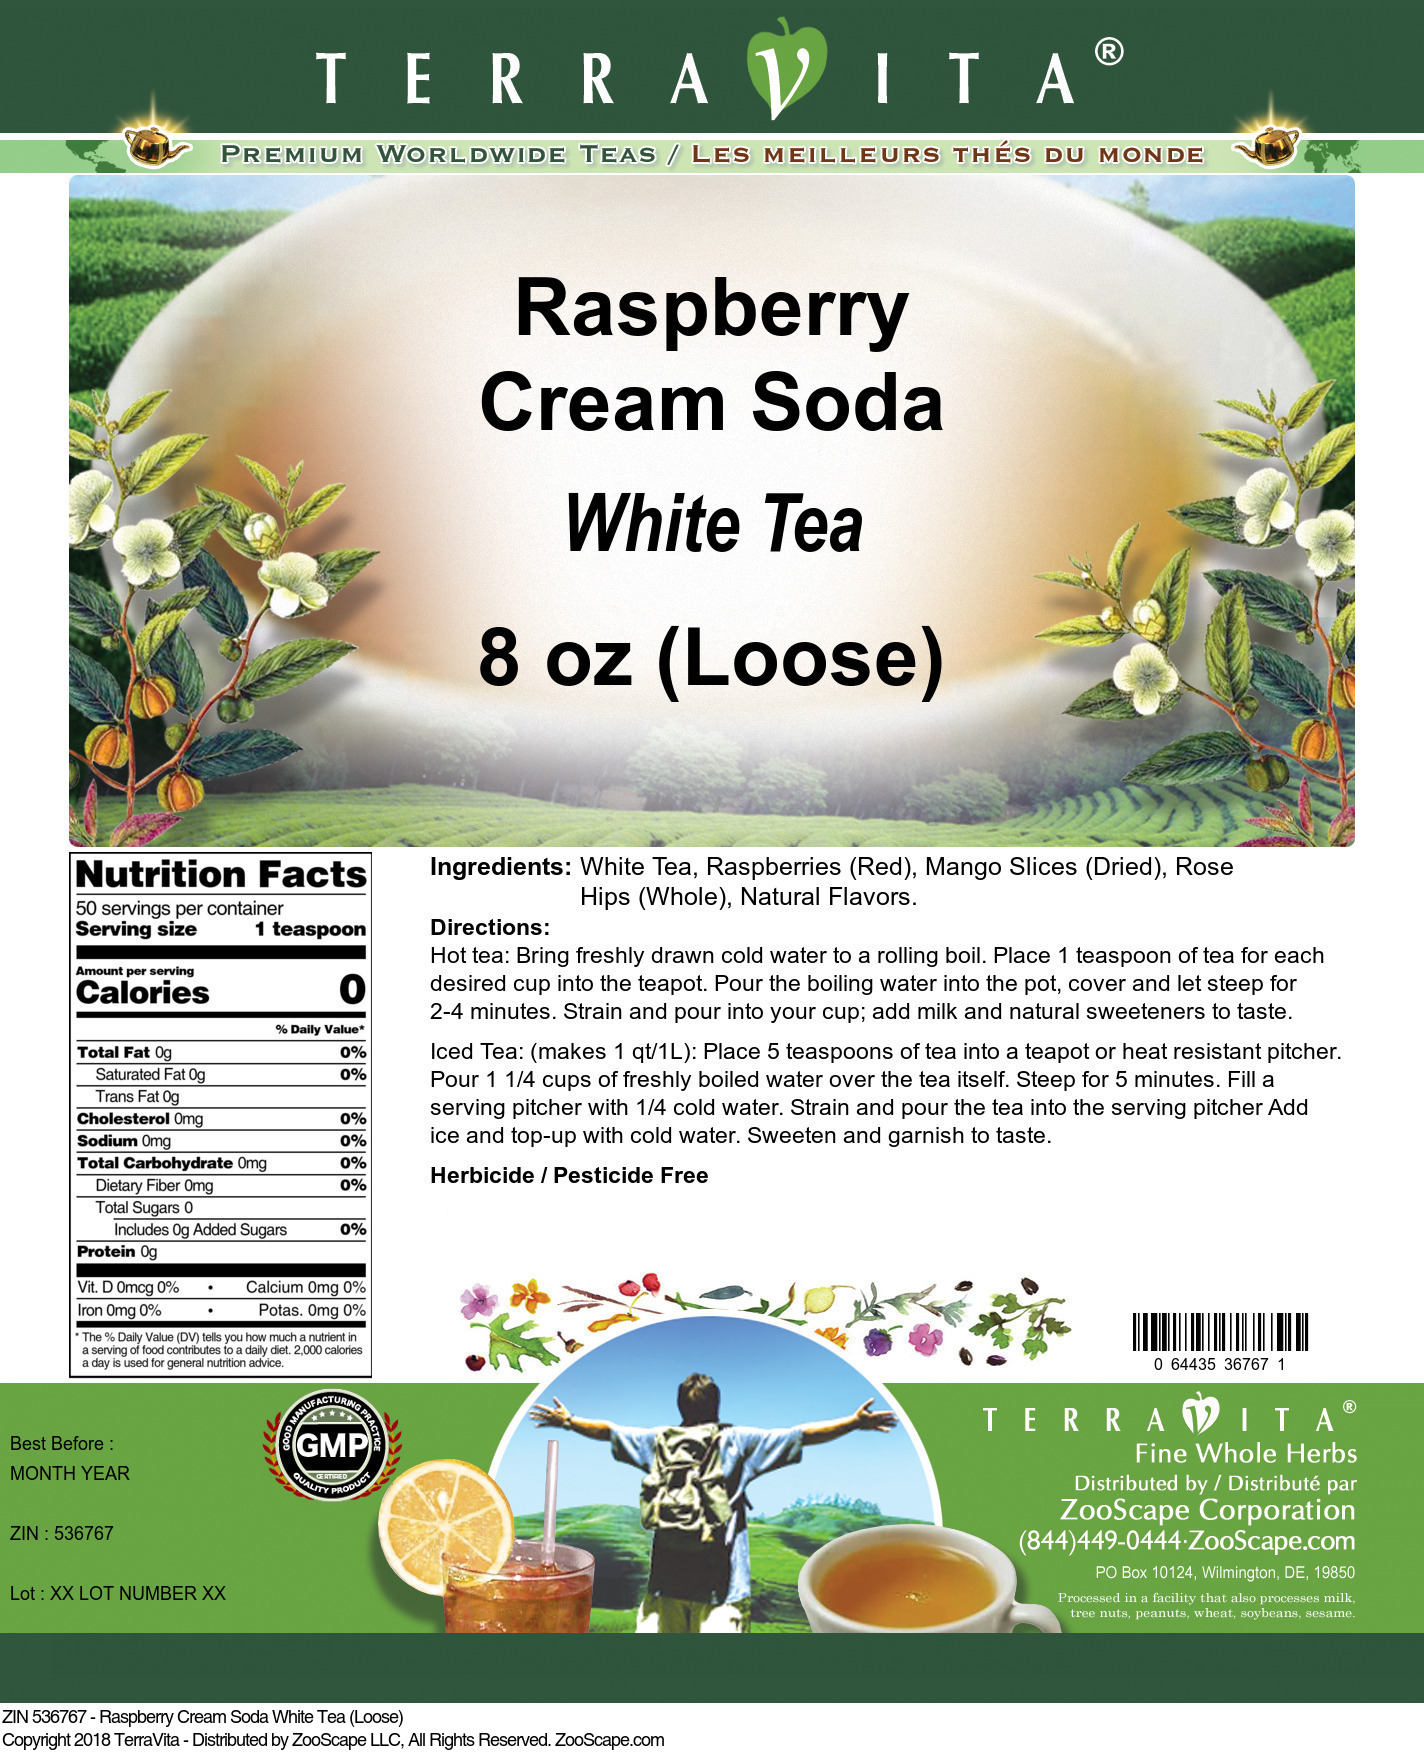 Raspberry Cream Soda White Tea (Loose) - Label